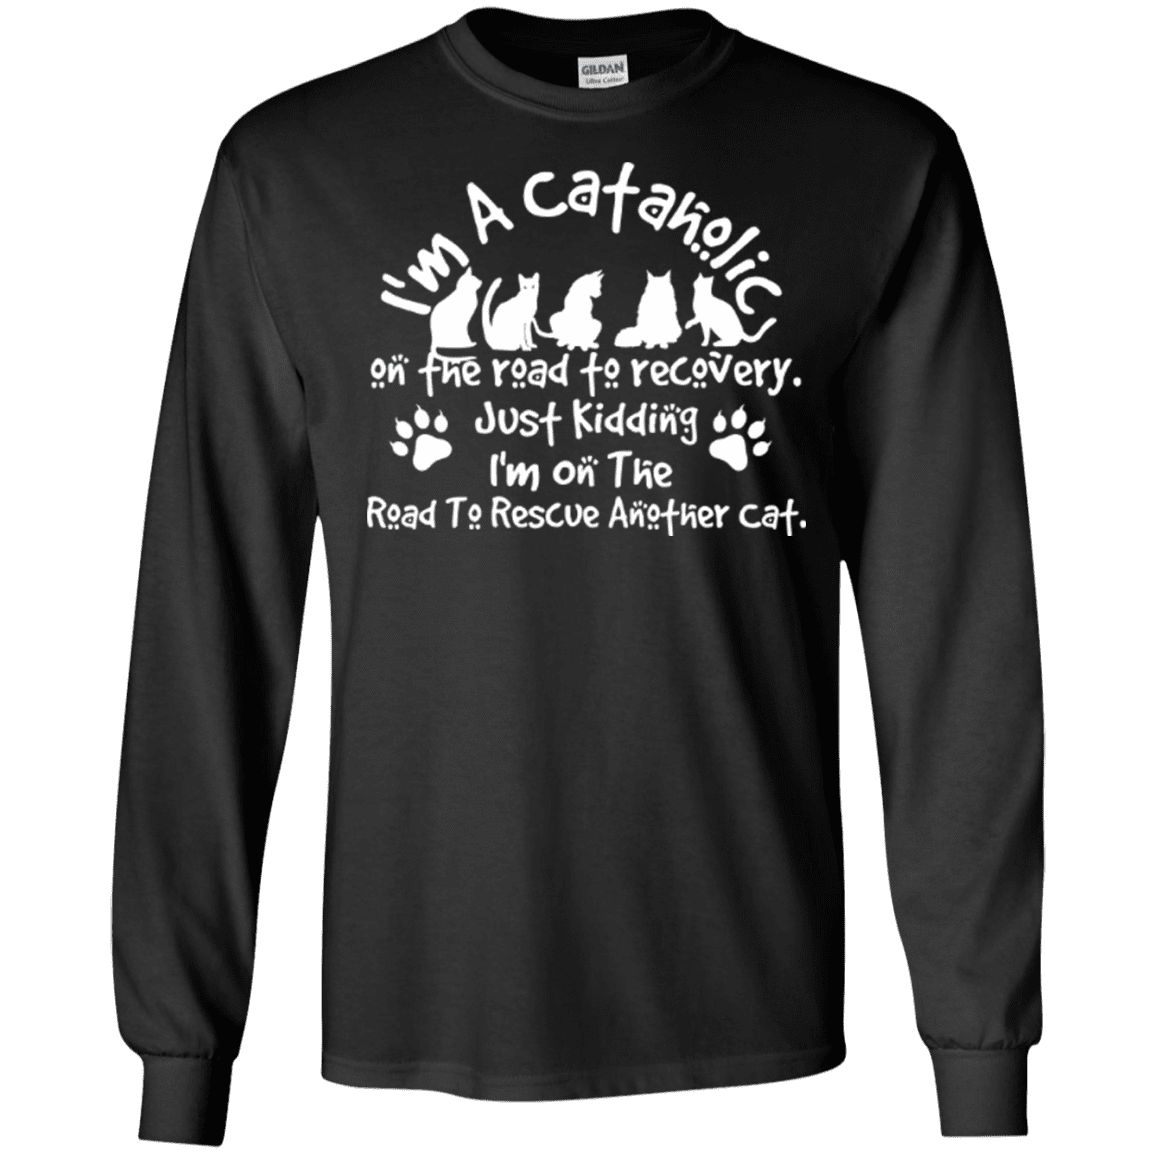 I'm A Cataholic - Long Sleeve T Shirt.